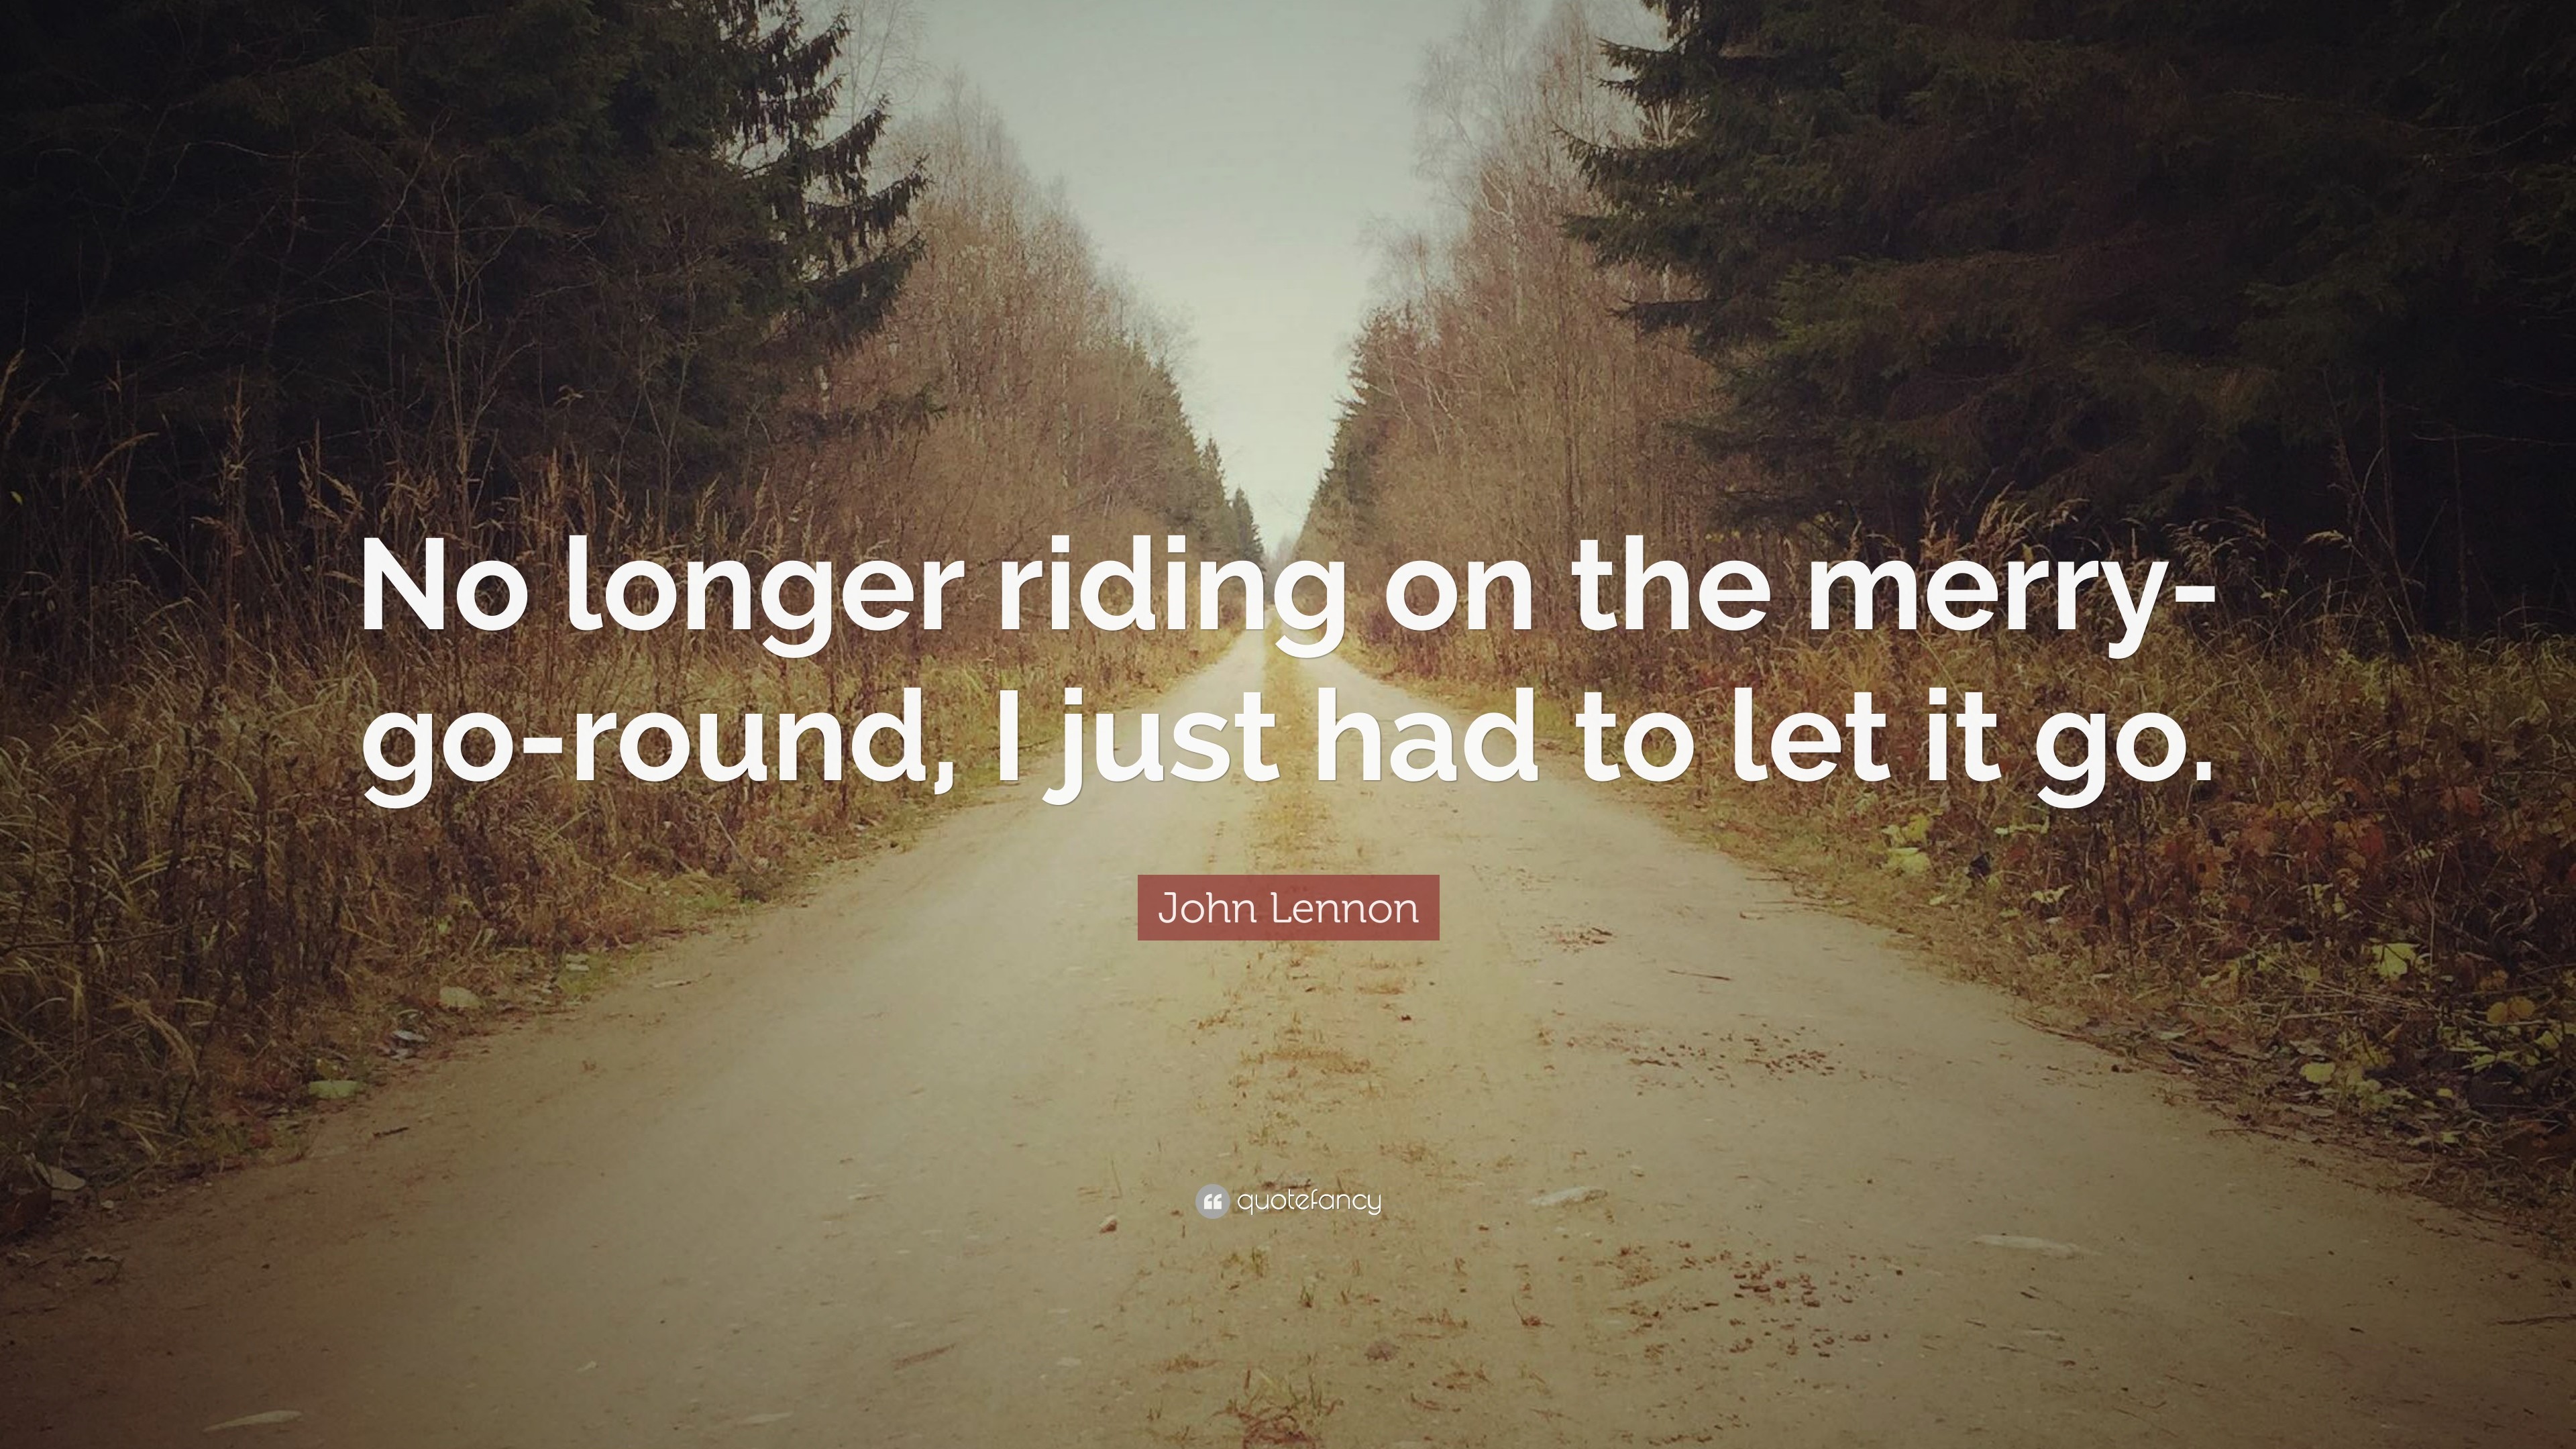 3840x2160 John Lennon Quote: “No longer riding on the merry-go-round,